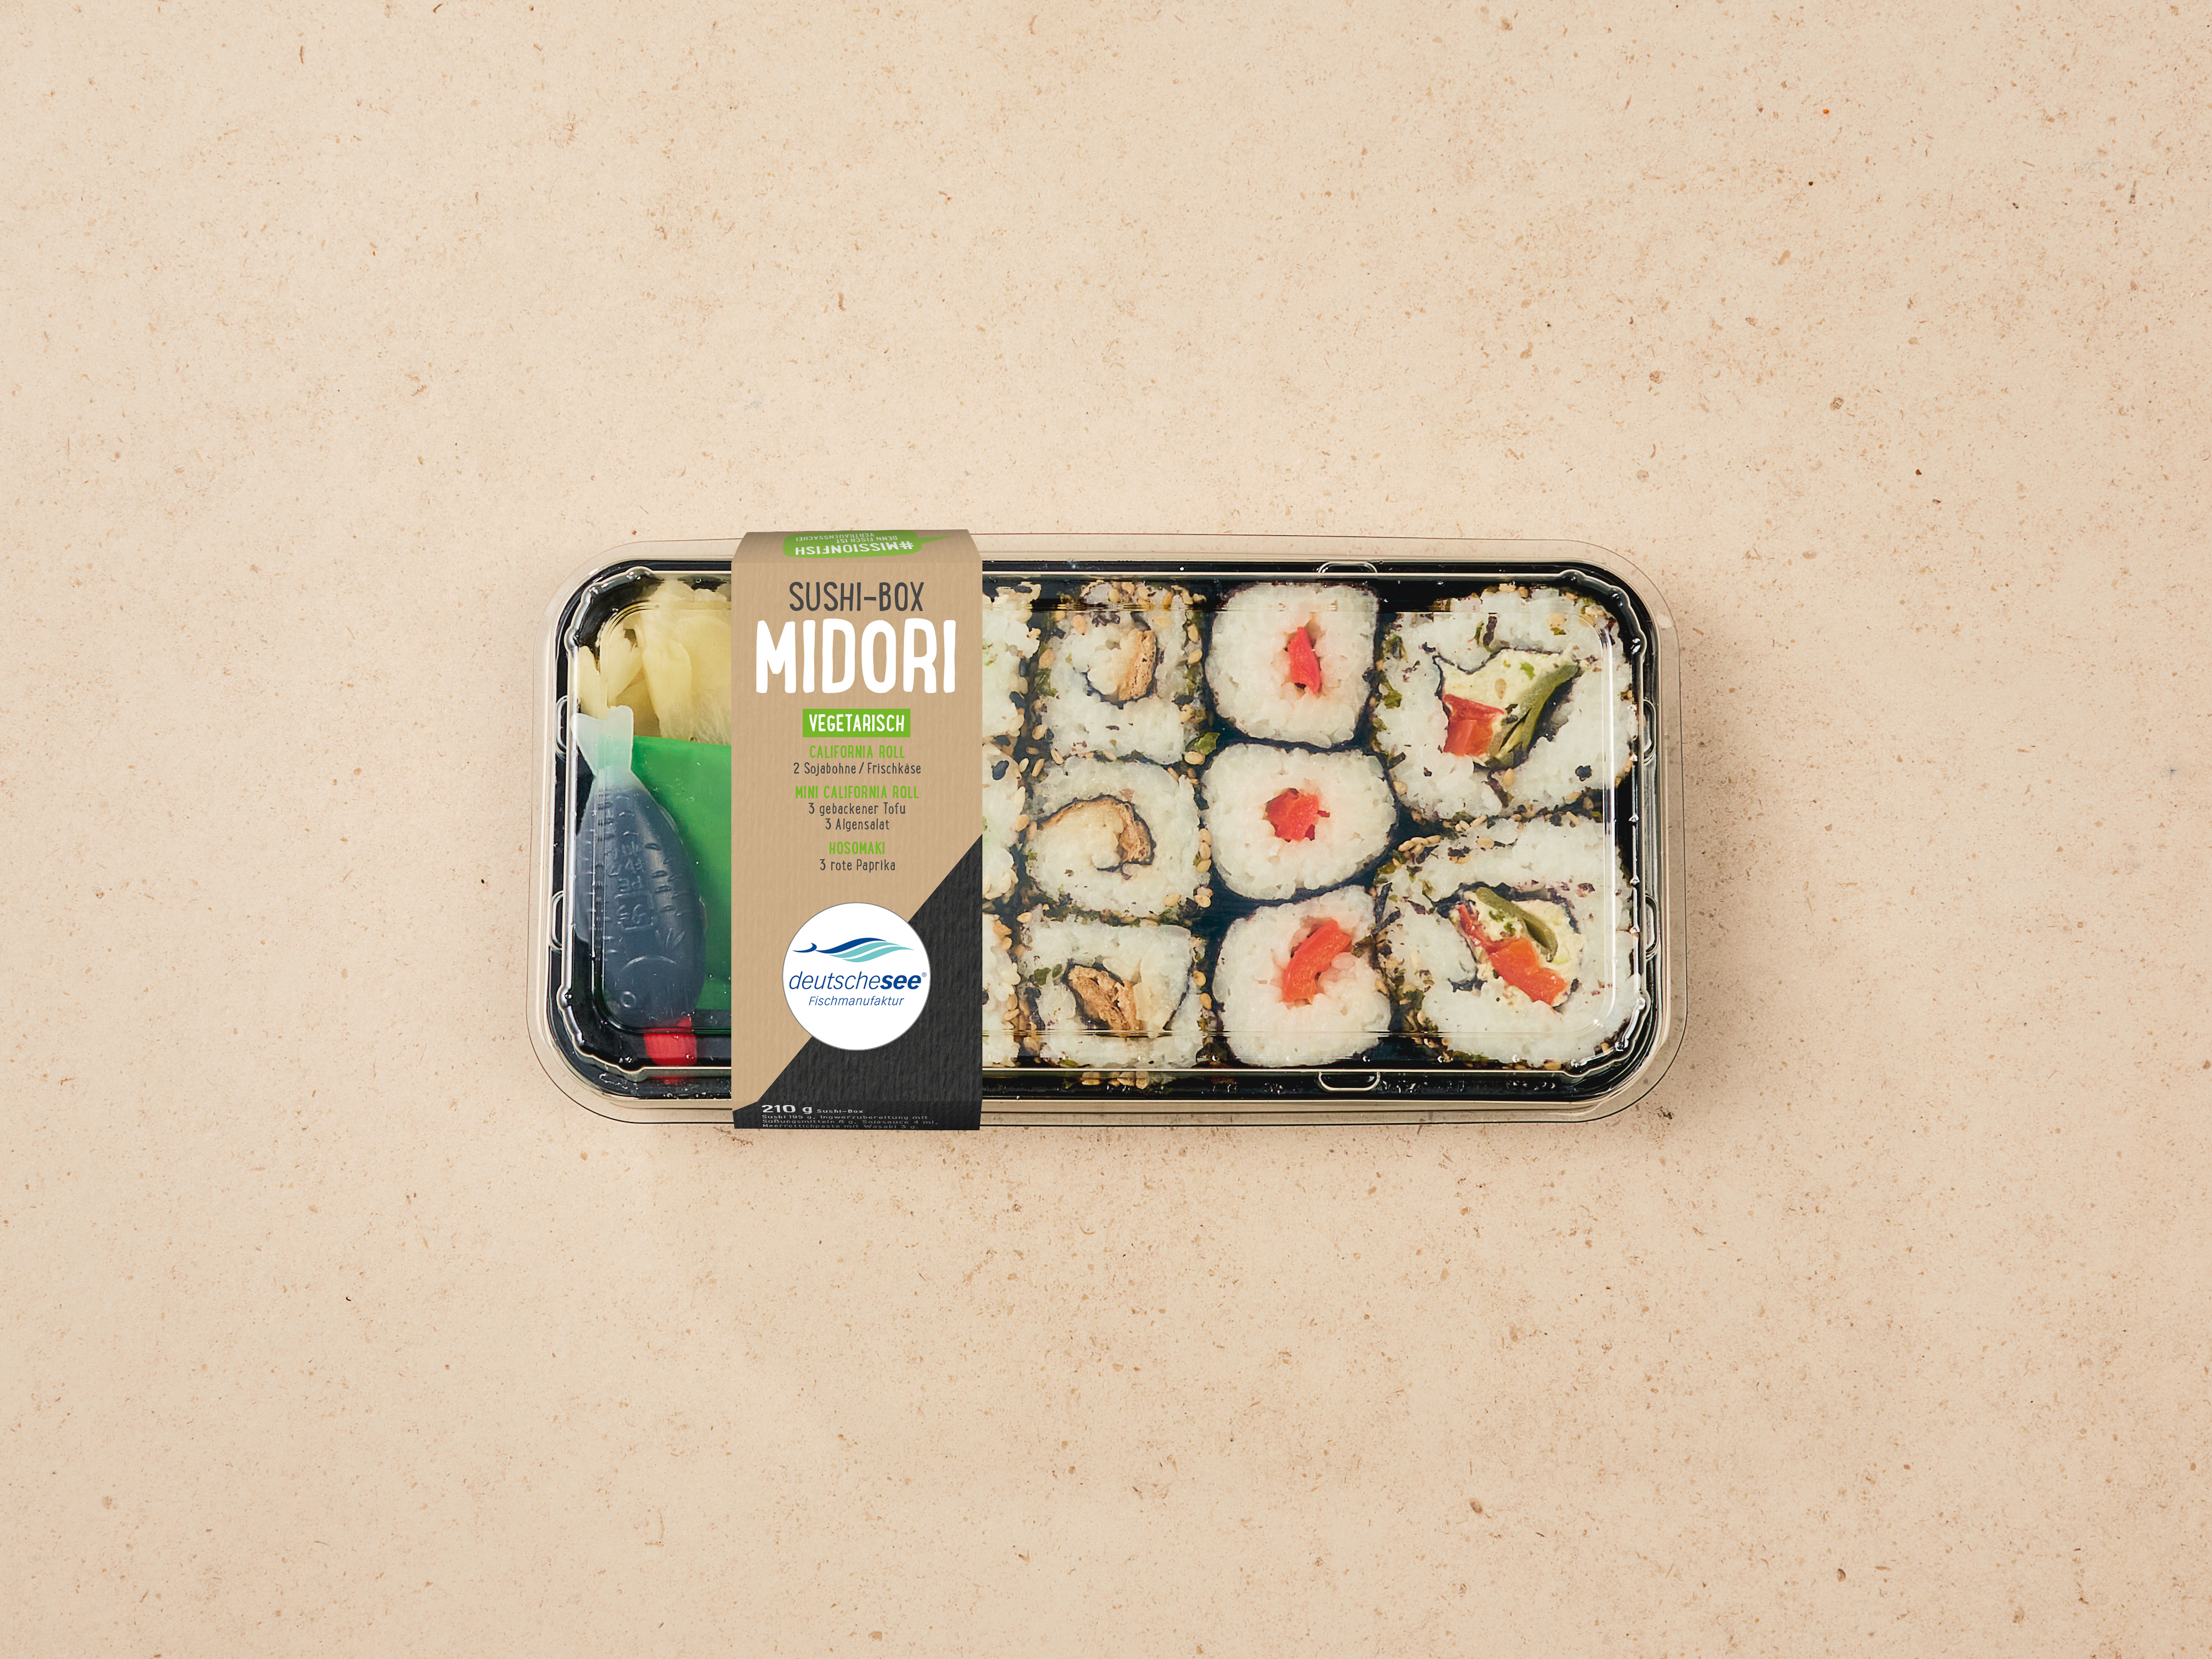 Vegetarisch Sushi-Box MIDORI